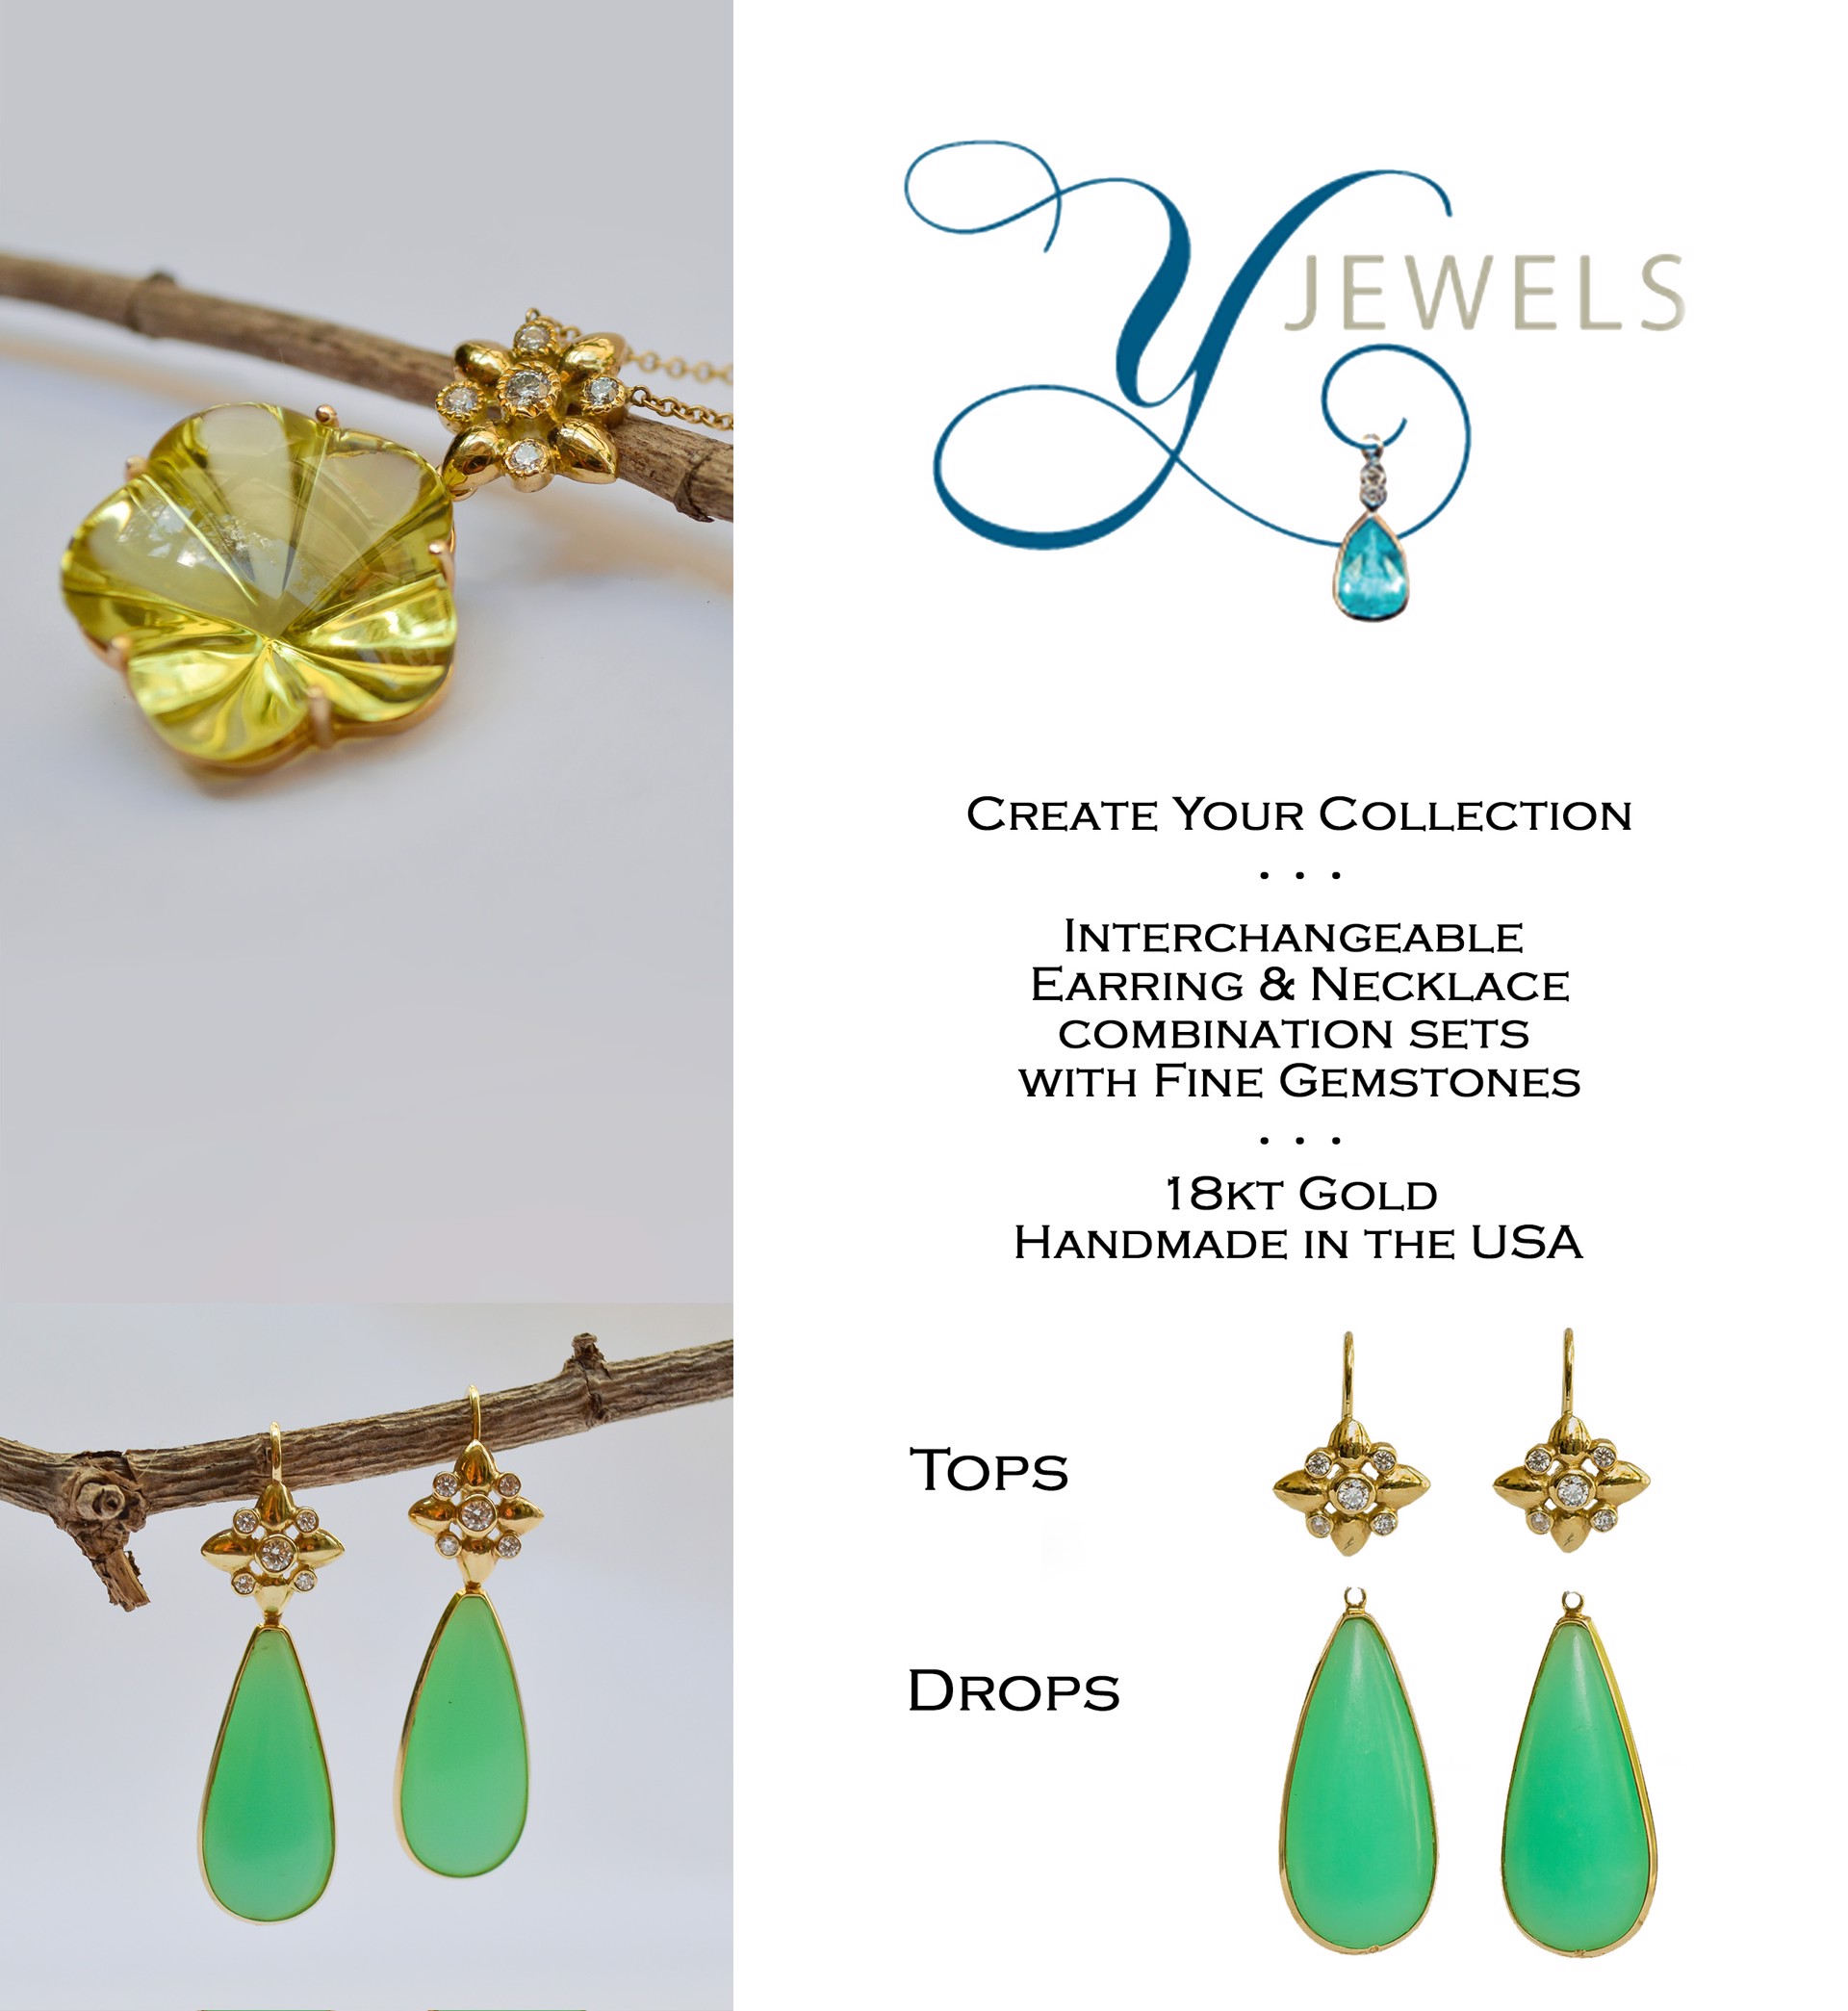 Y Jewel Tops & Drops Concept by Y Jewels